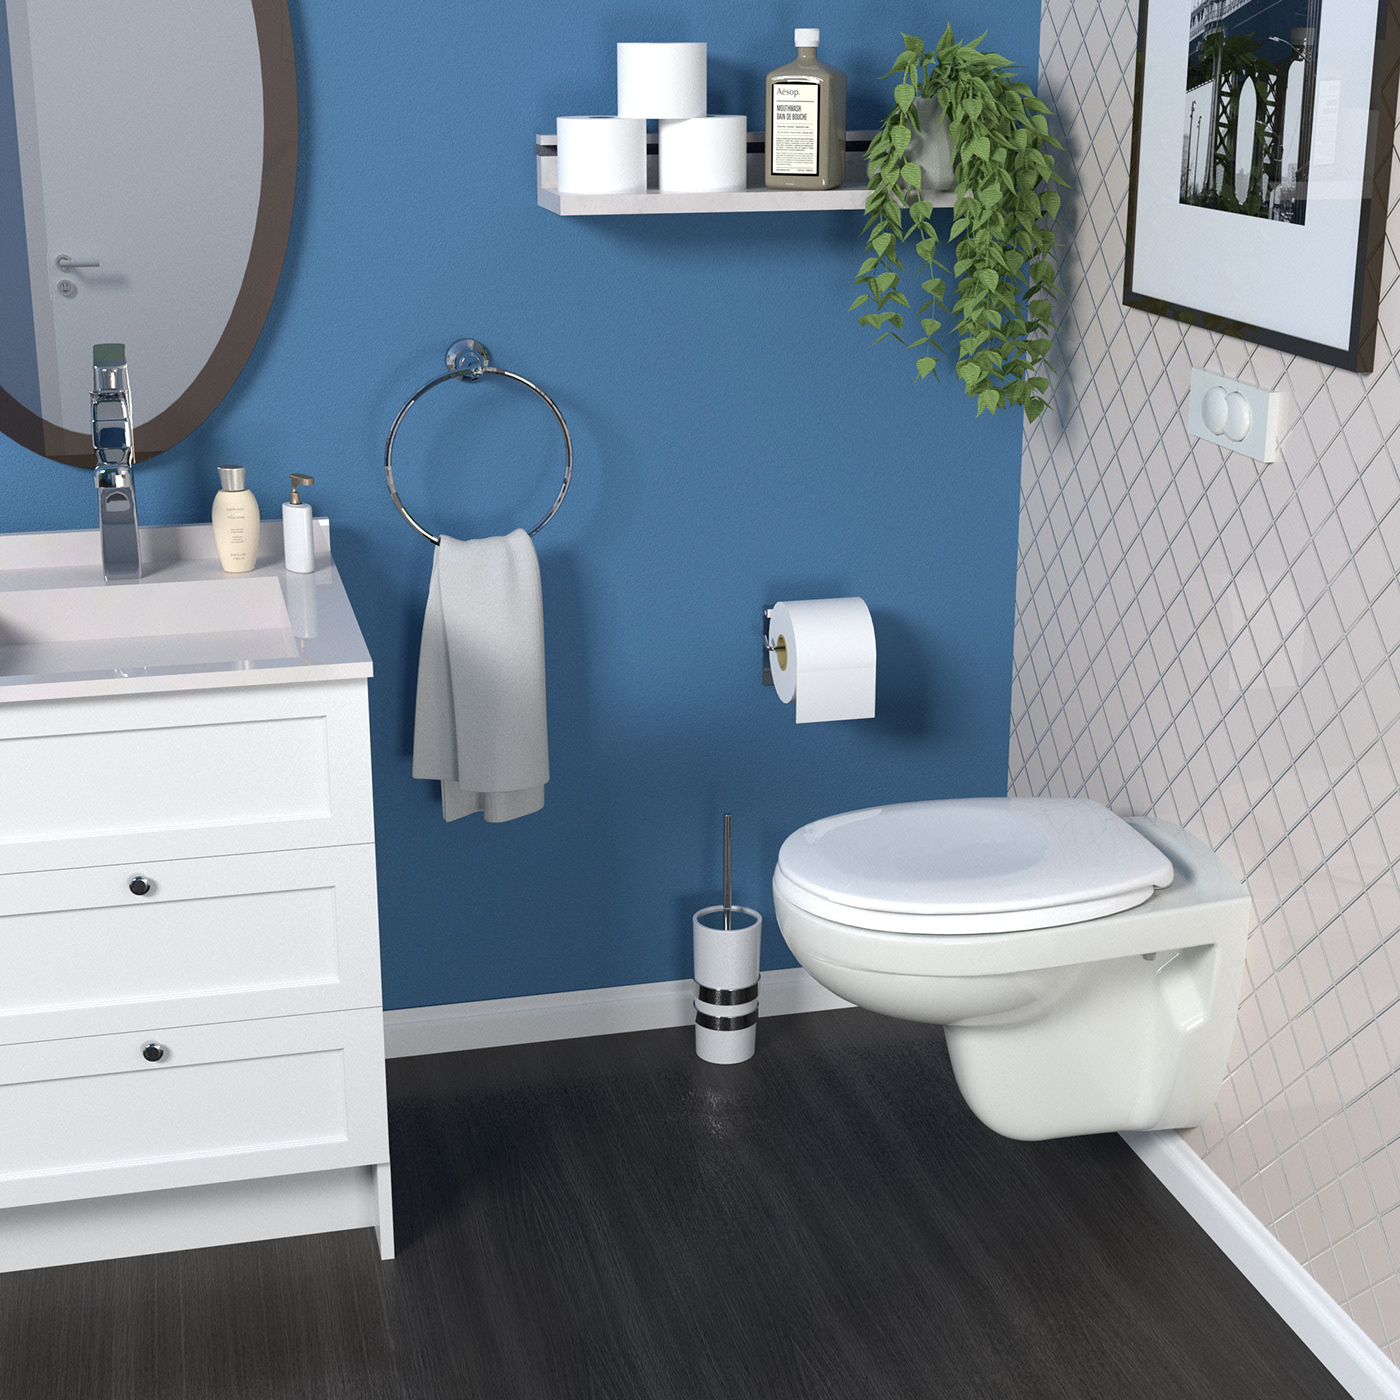 3D bathroom Render rendering toilet seat toilet seats